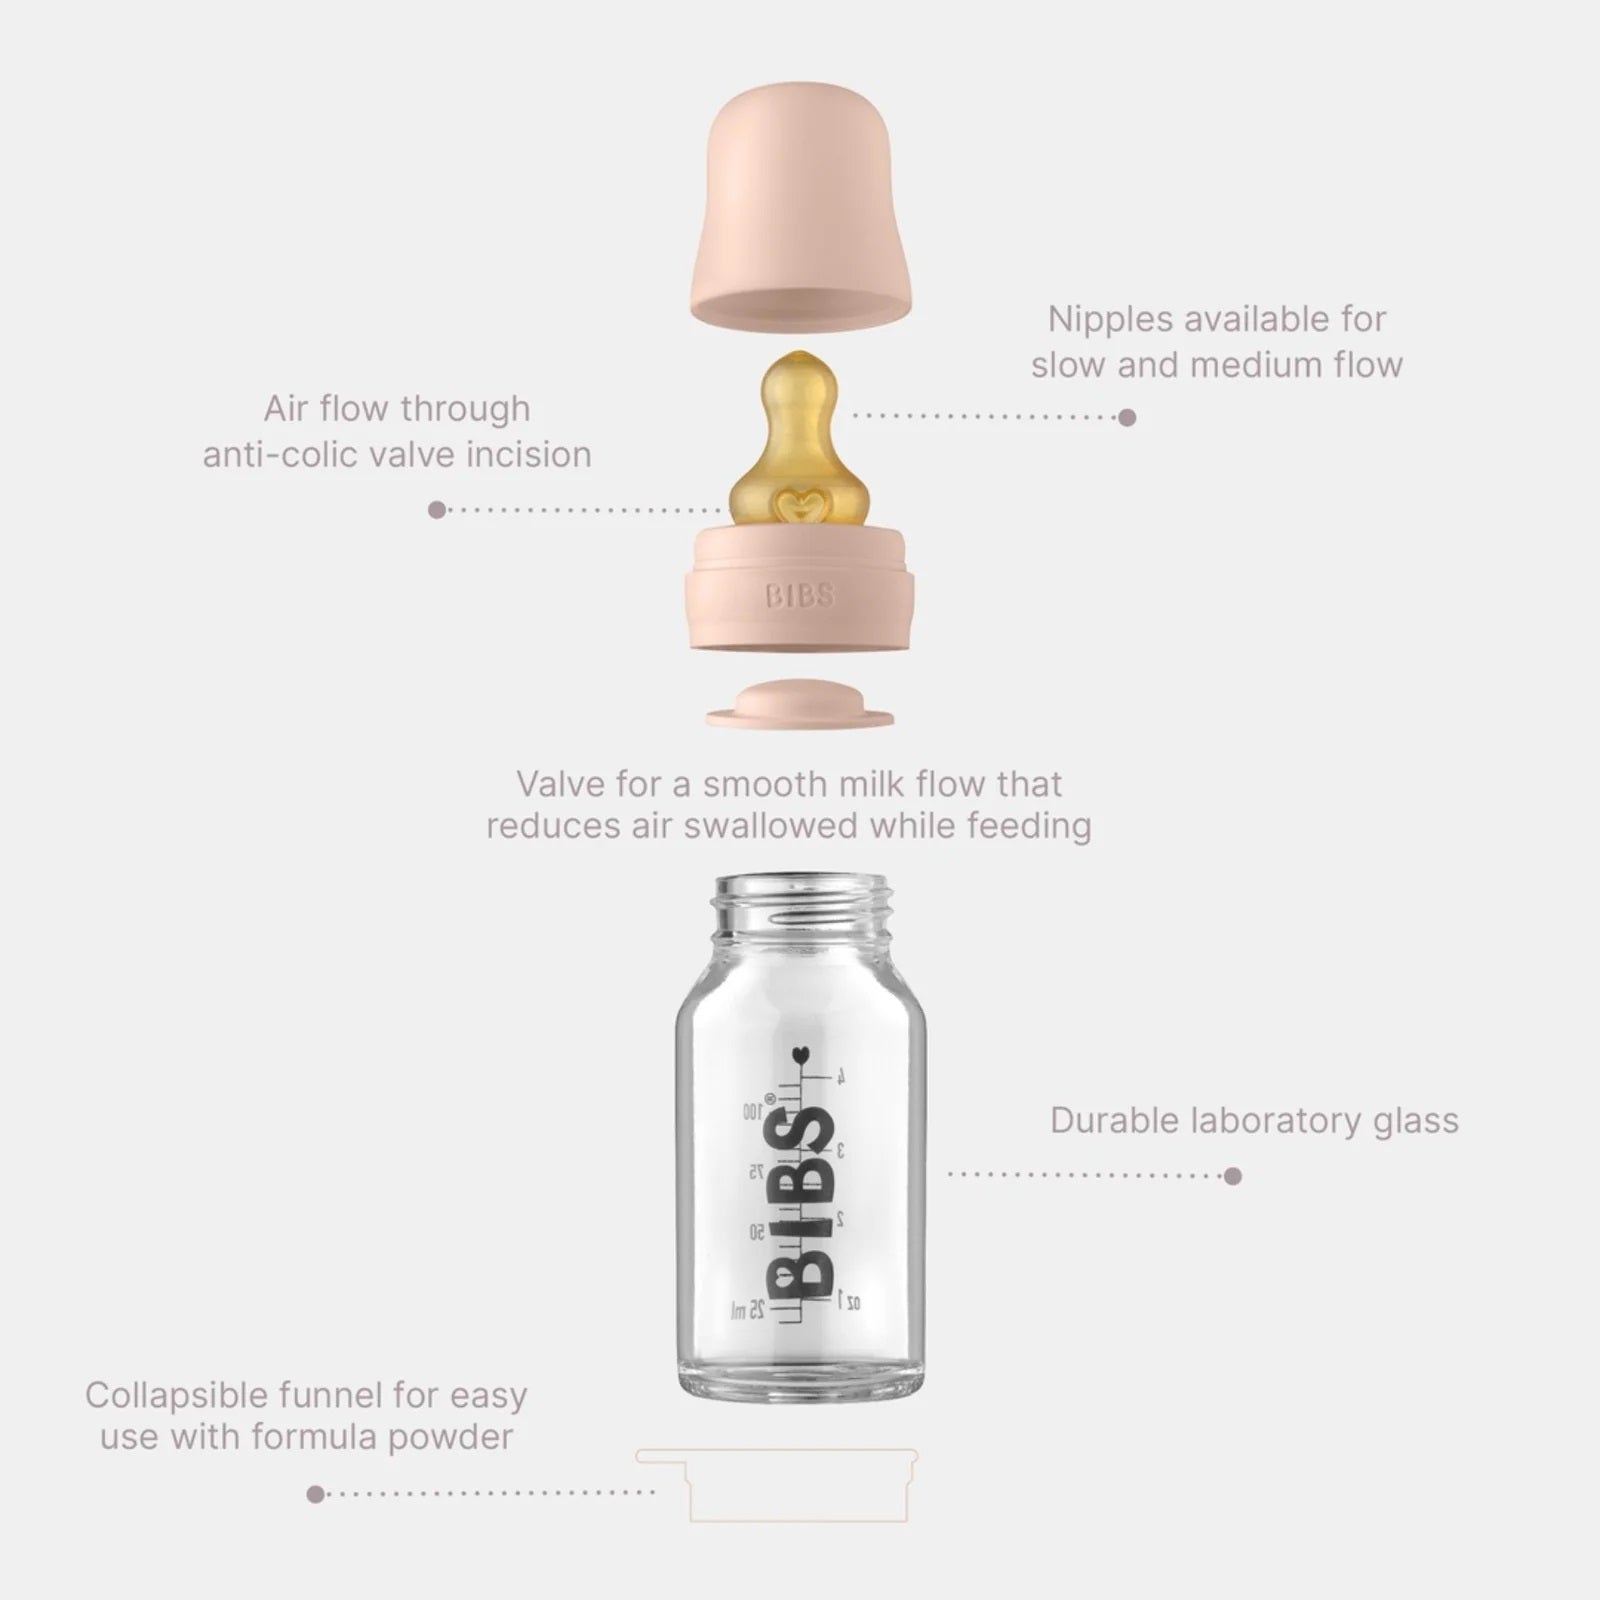 Bibs 110ml Glass Bottle Set - Sage